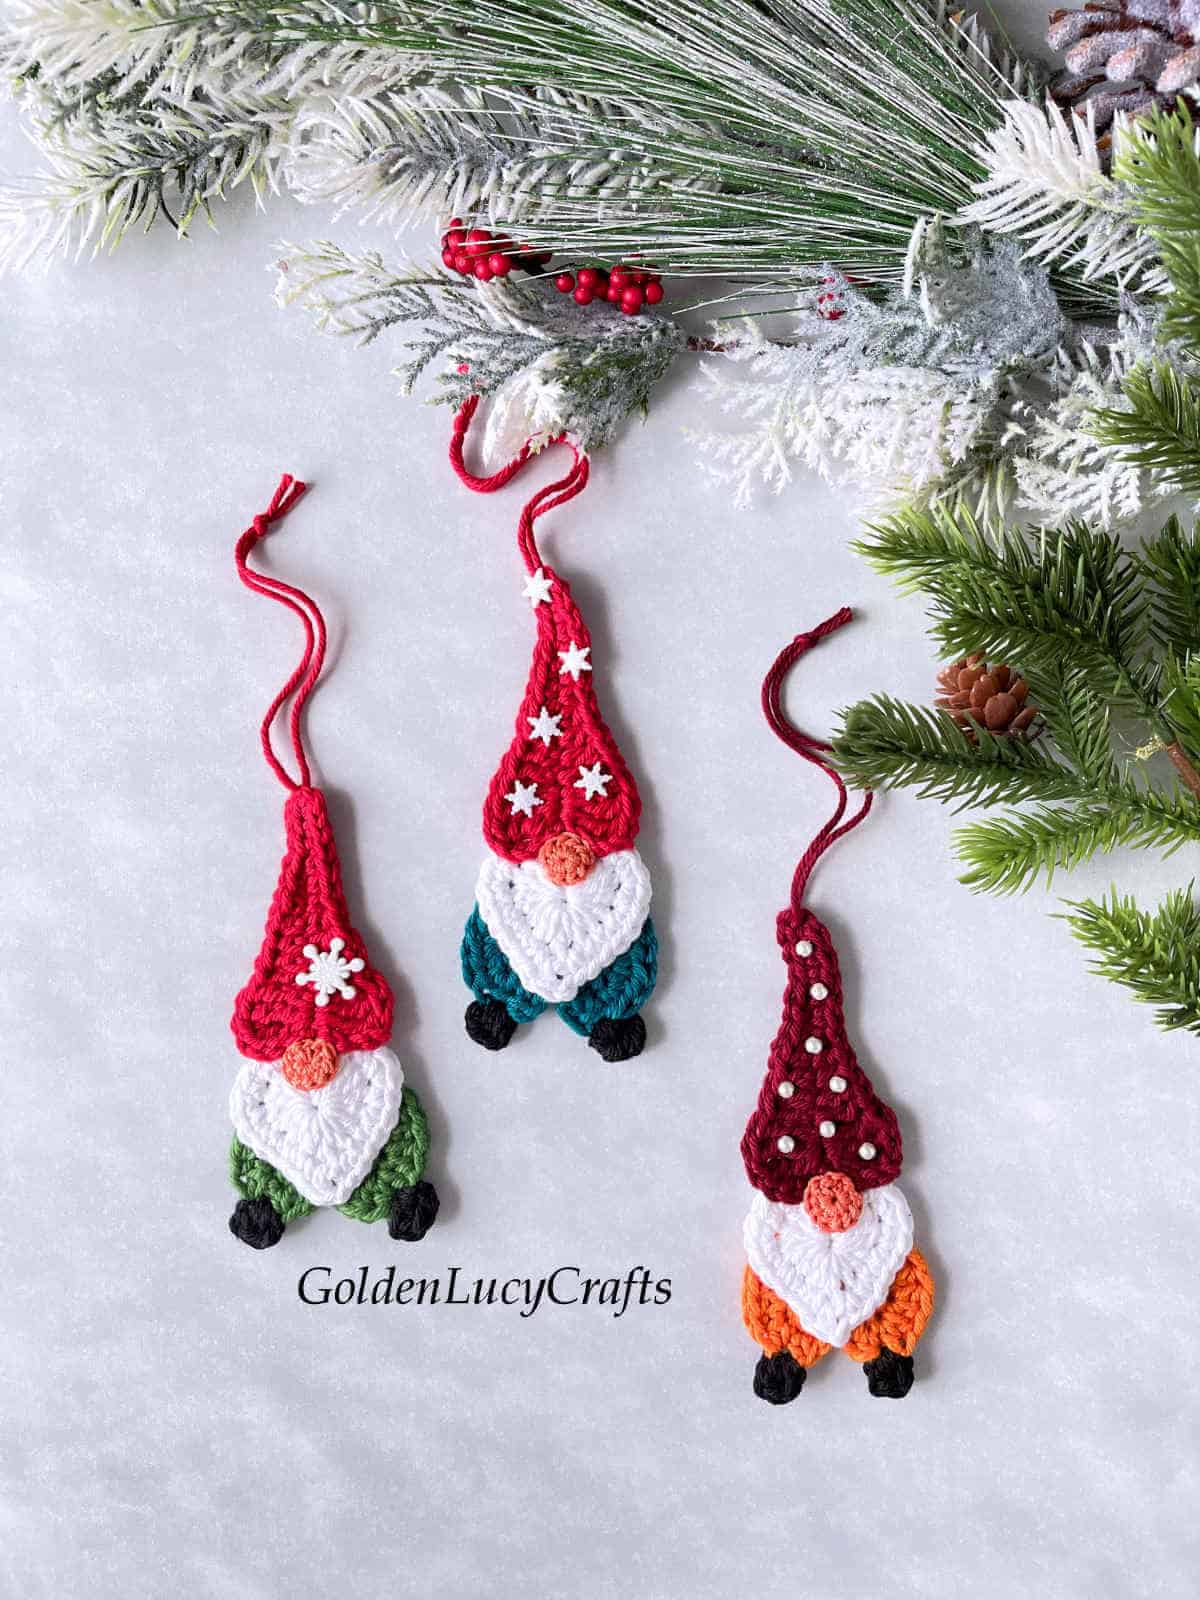 Three crocheted Christmas gnome ornaments.